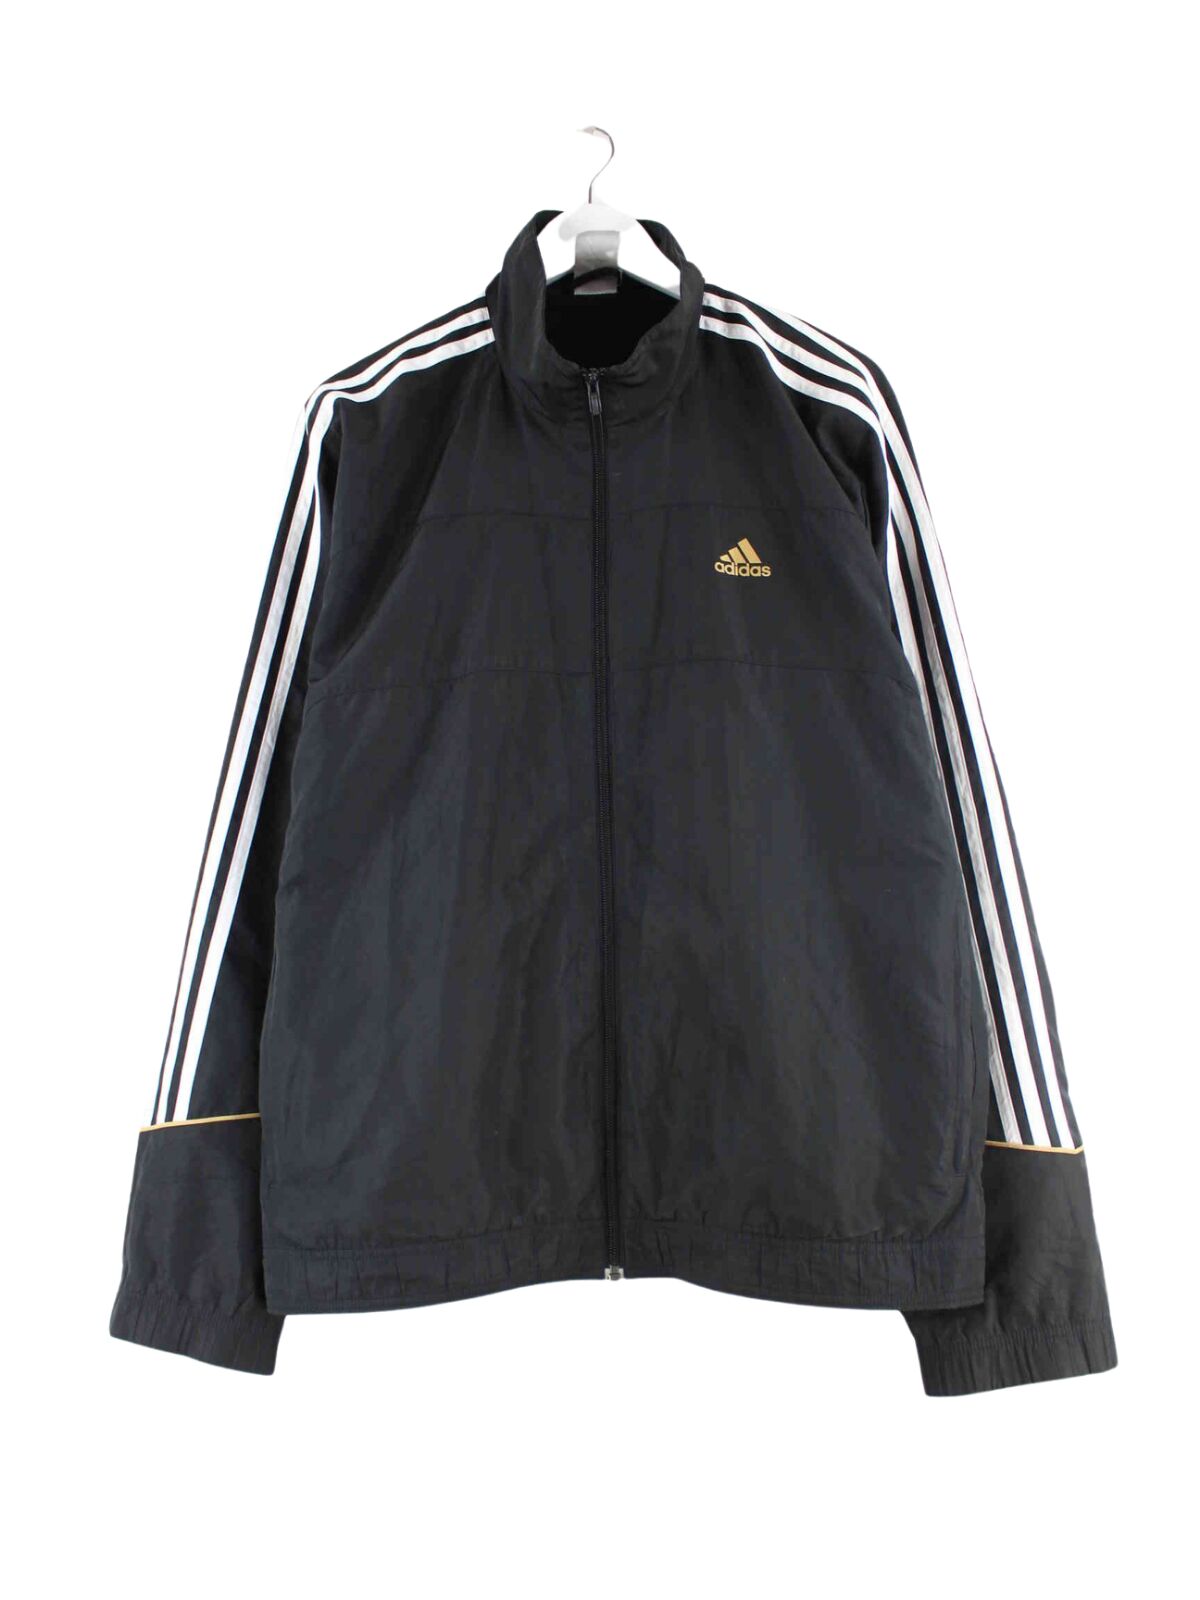 Adidas 3-Stripes Trainingsjacke Schwarz L (front image)